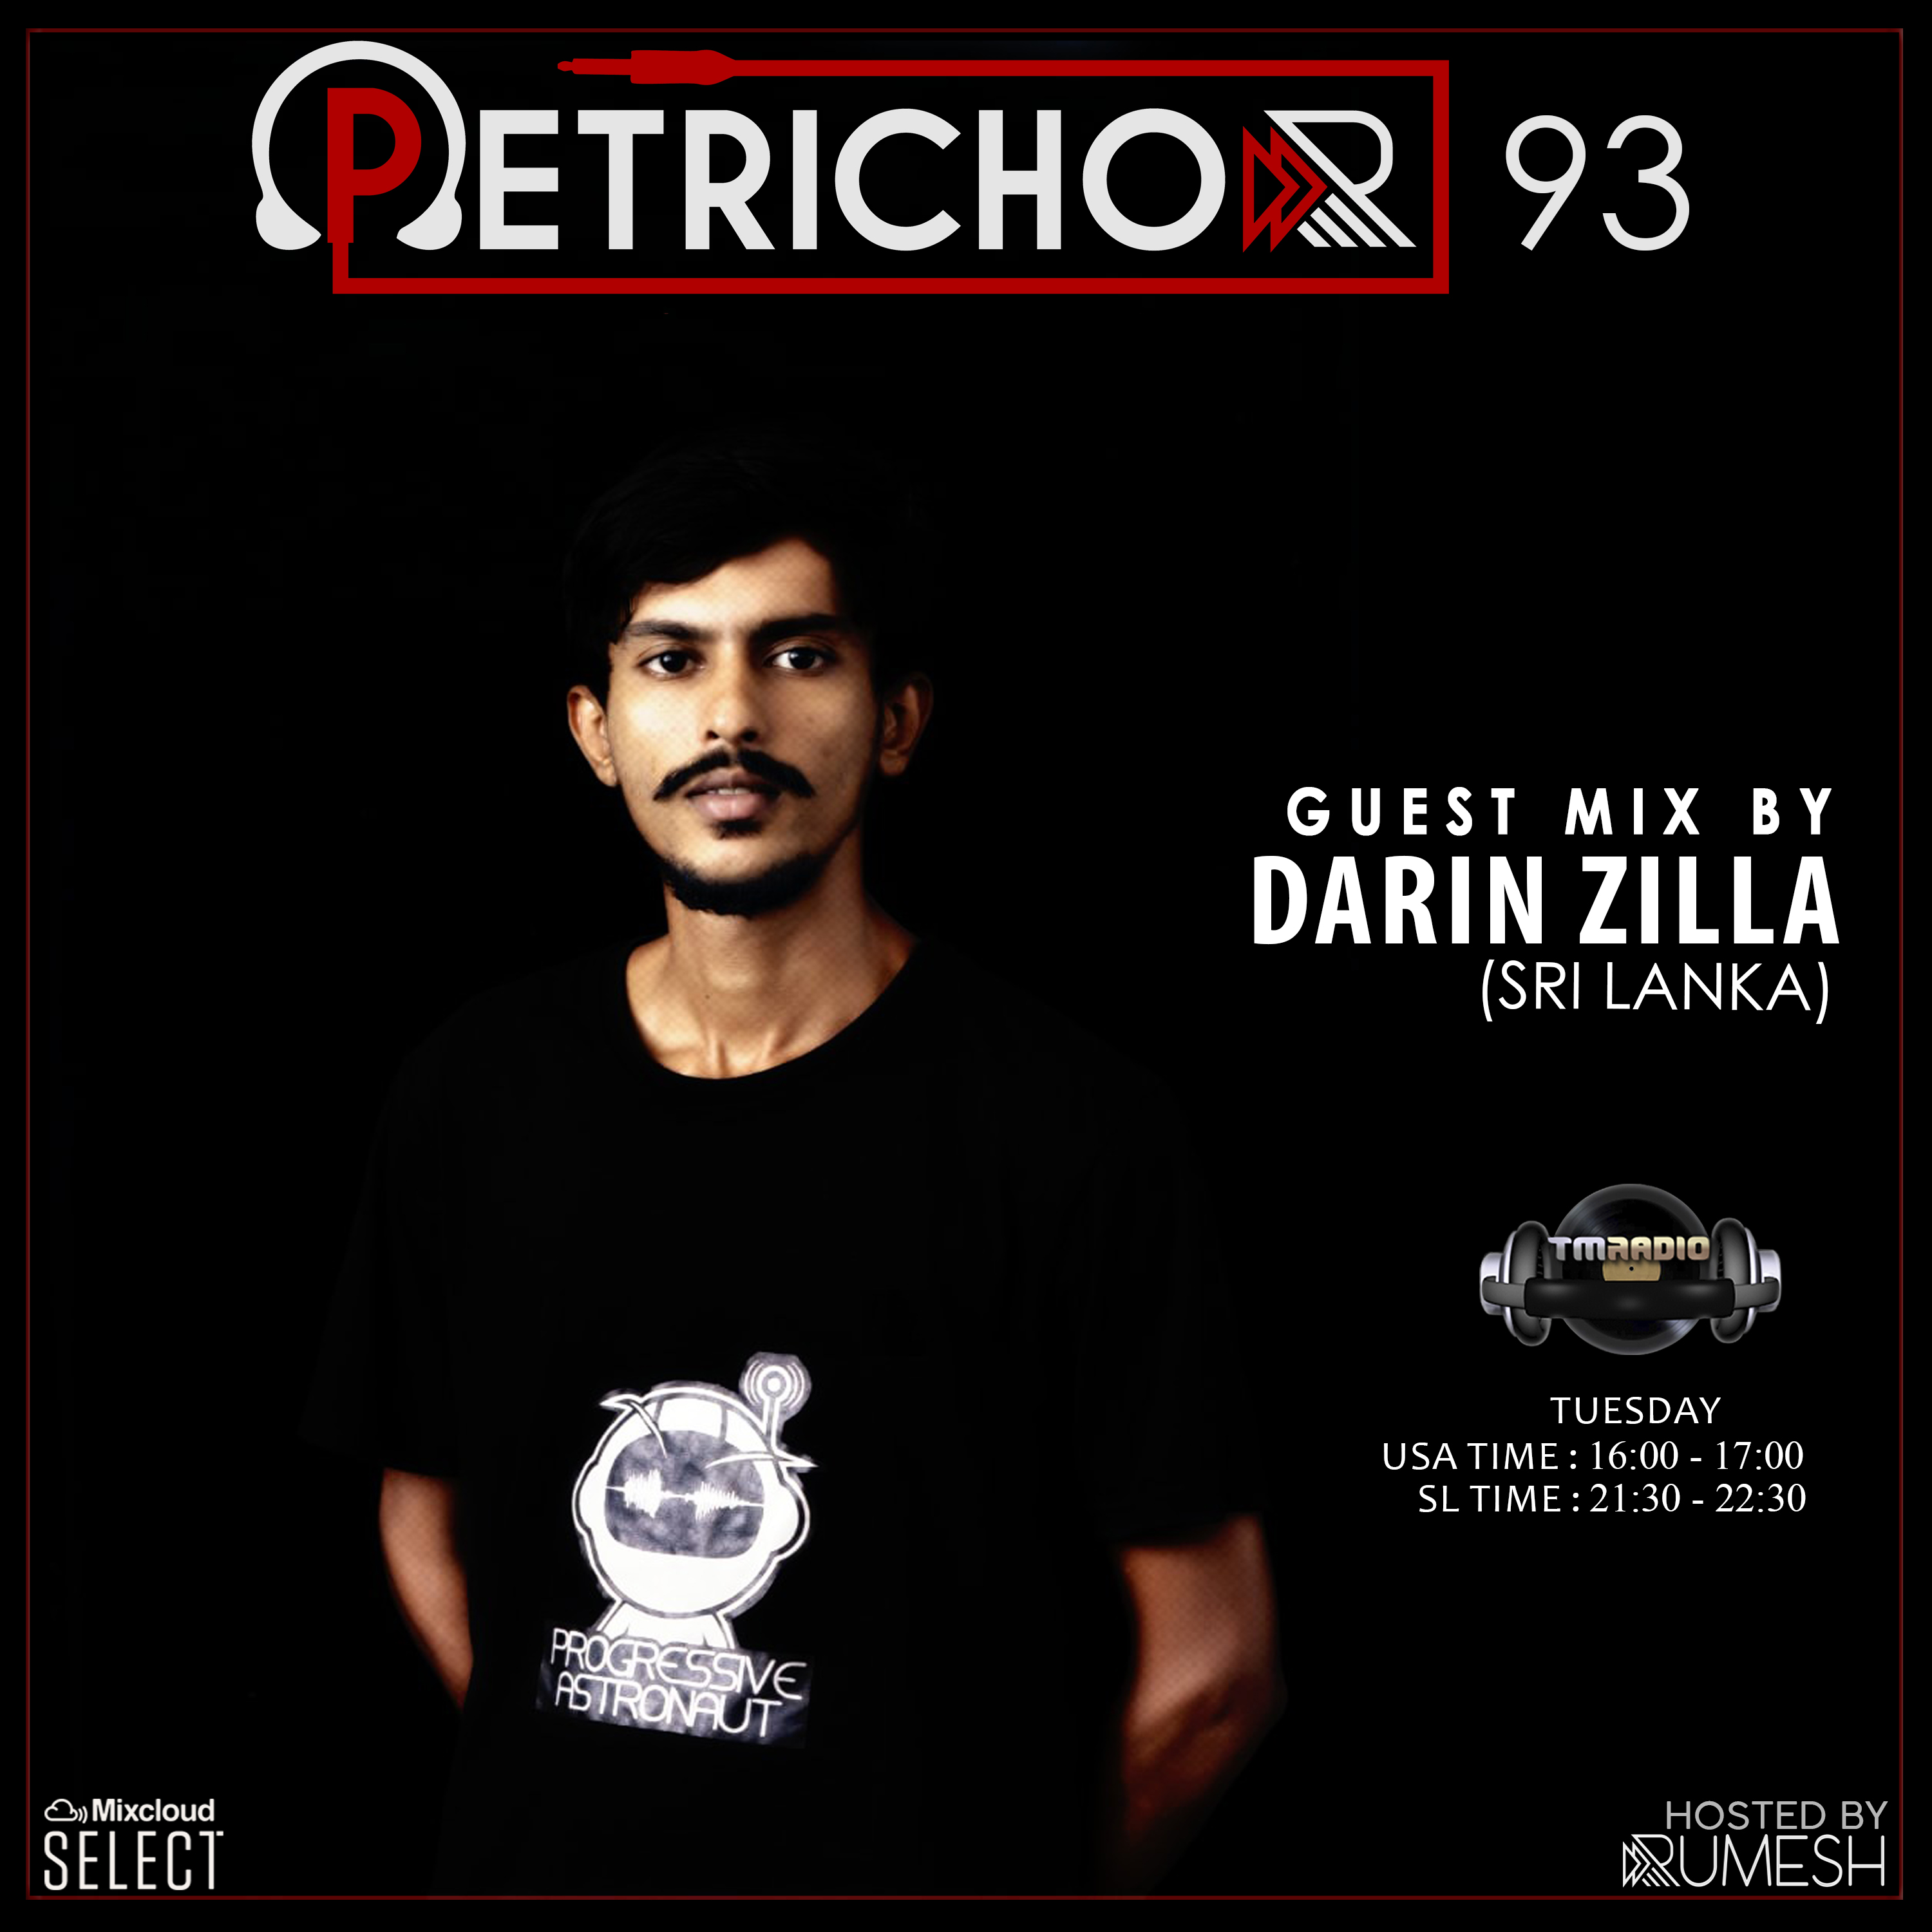 Petrichor :: Petrichor 93 guest mix by Darin Zilla (Sri Lanka) (aired on November 10th, 2020) banner logo